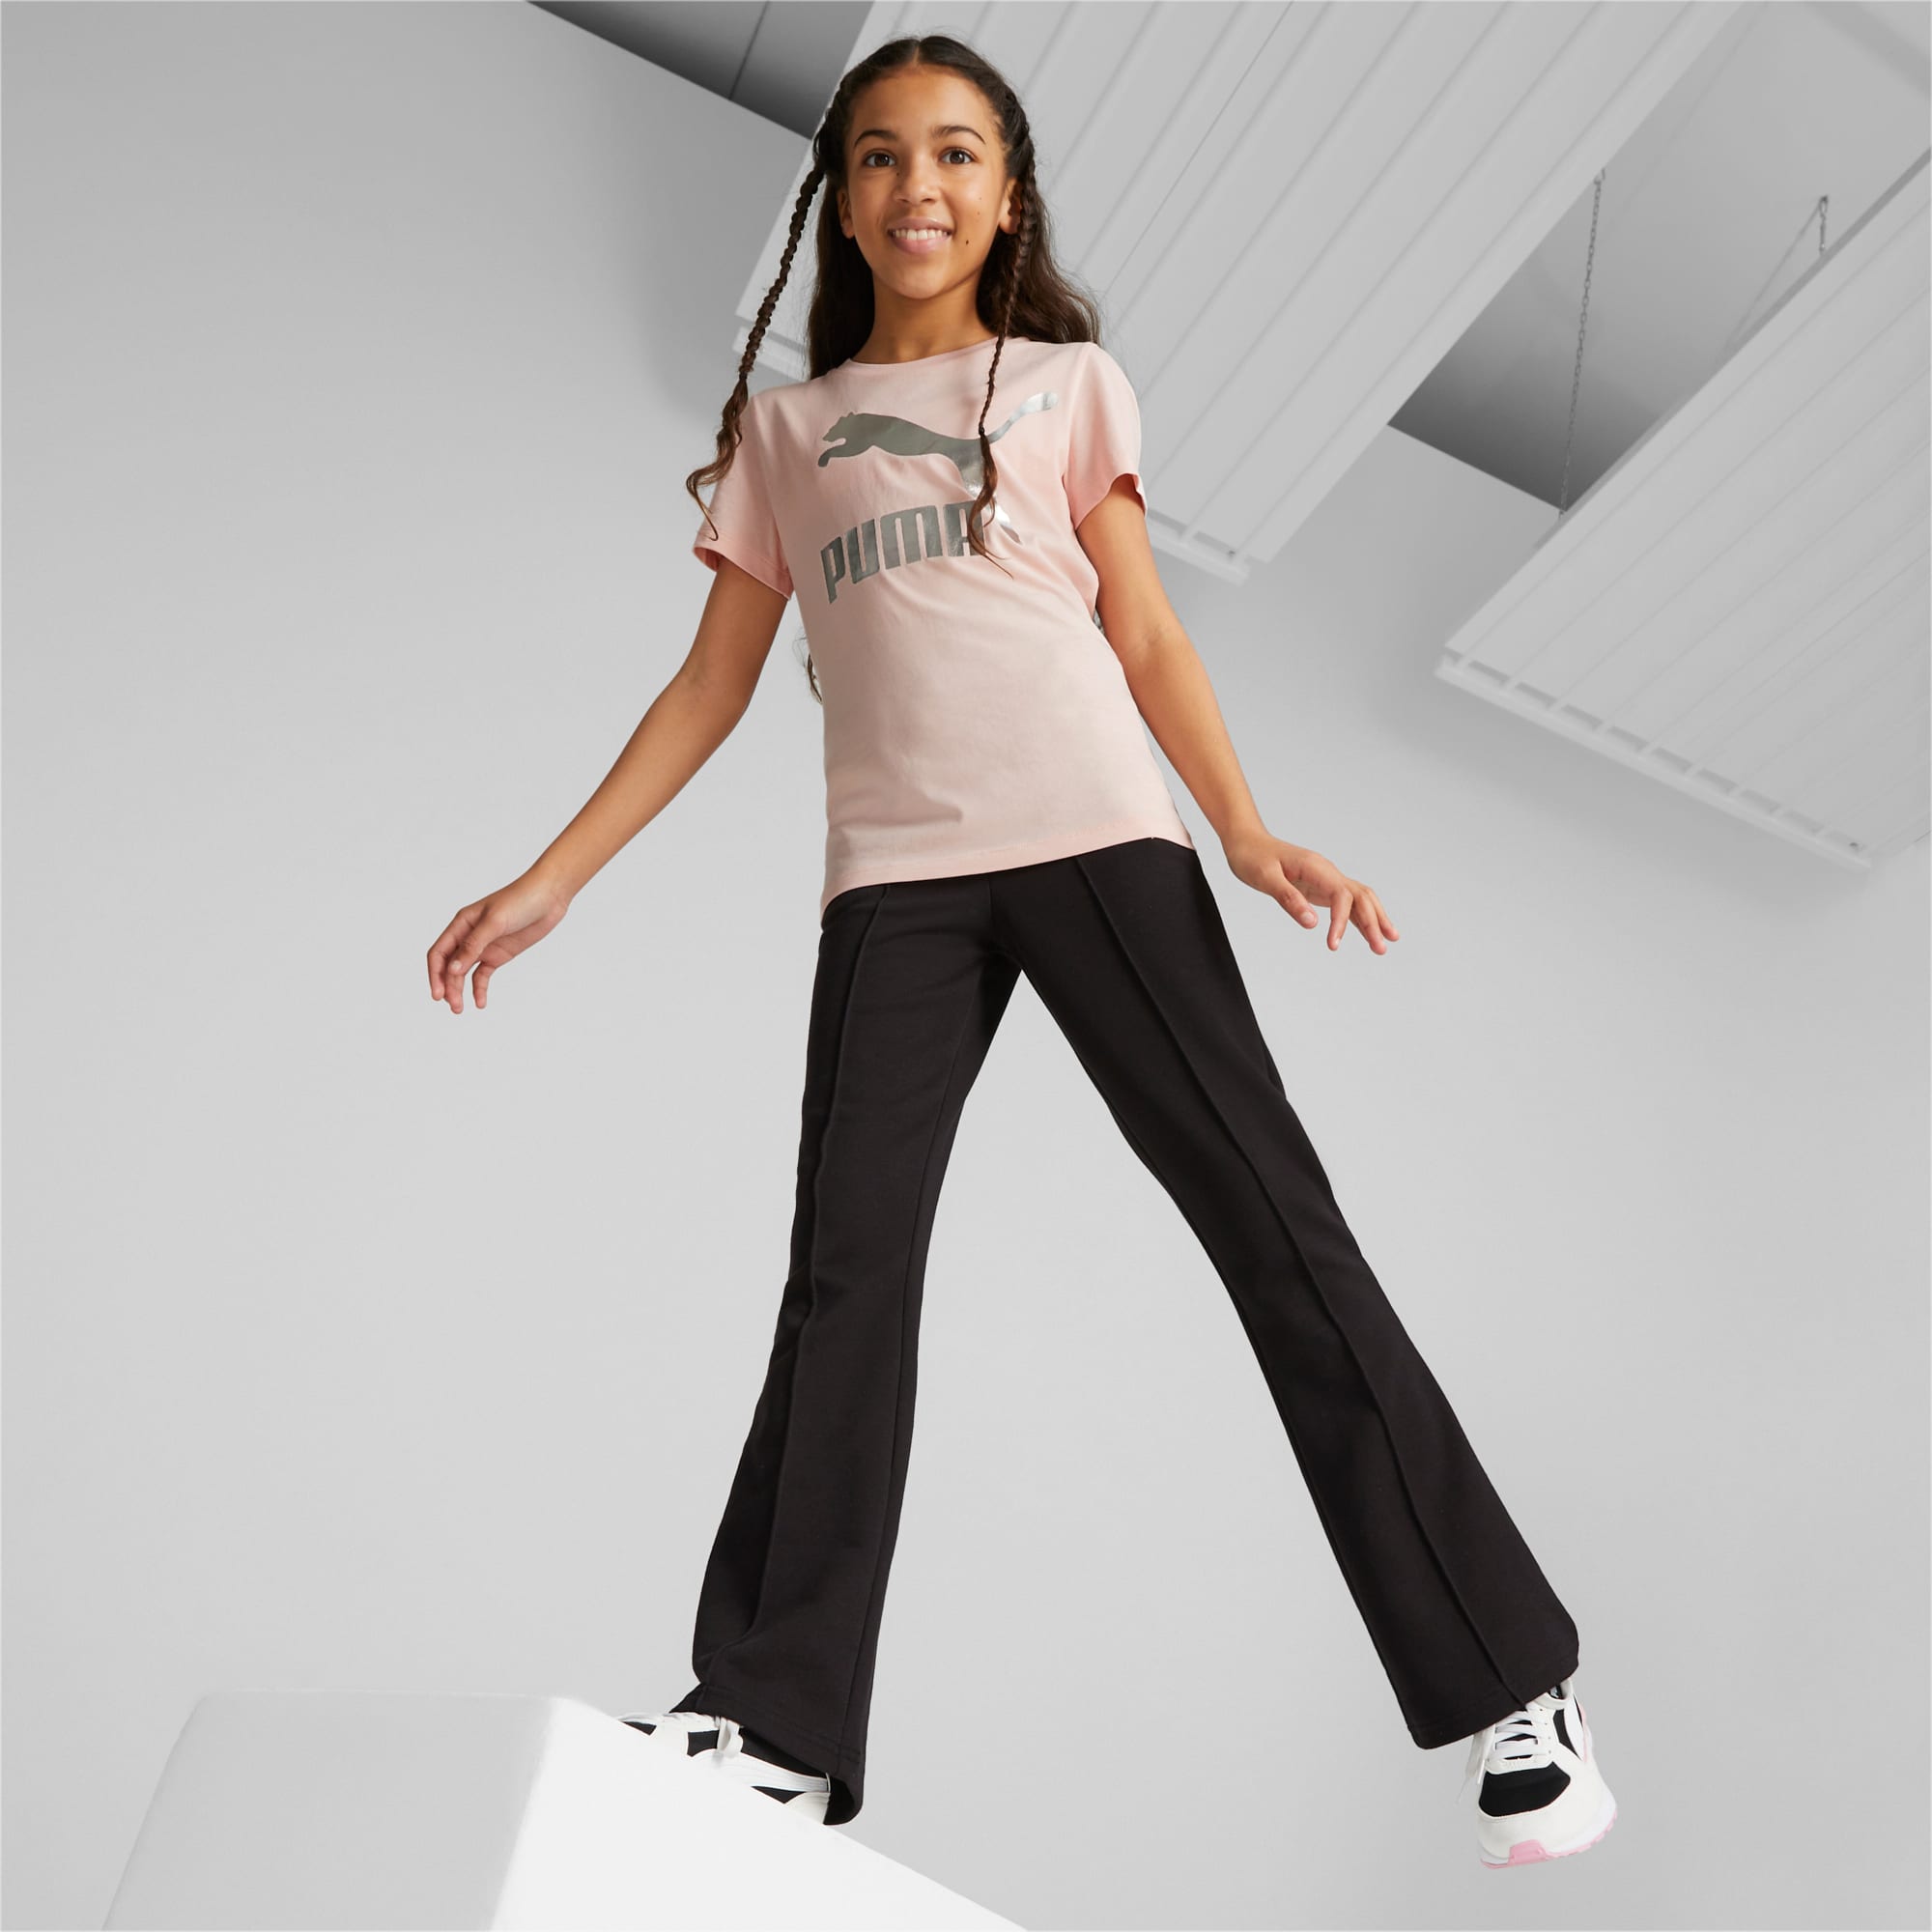 PUMA Classics Logo Jugend T-Shirt Für Kinder, Rosa, Größe: 116, Kleidung